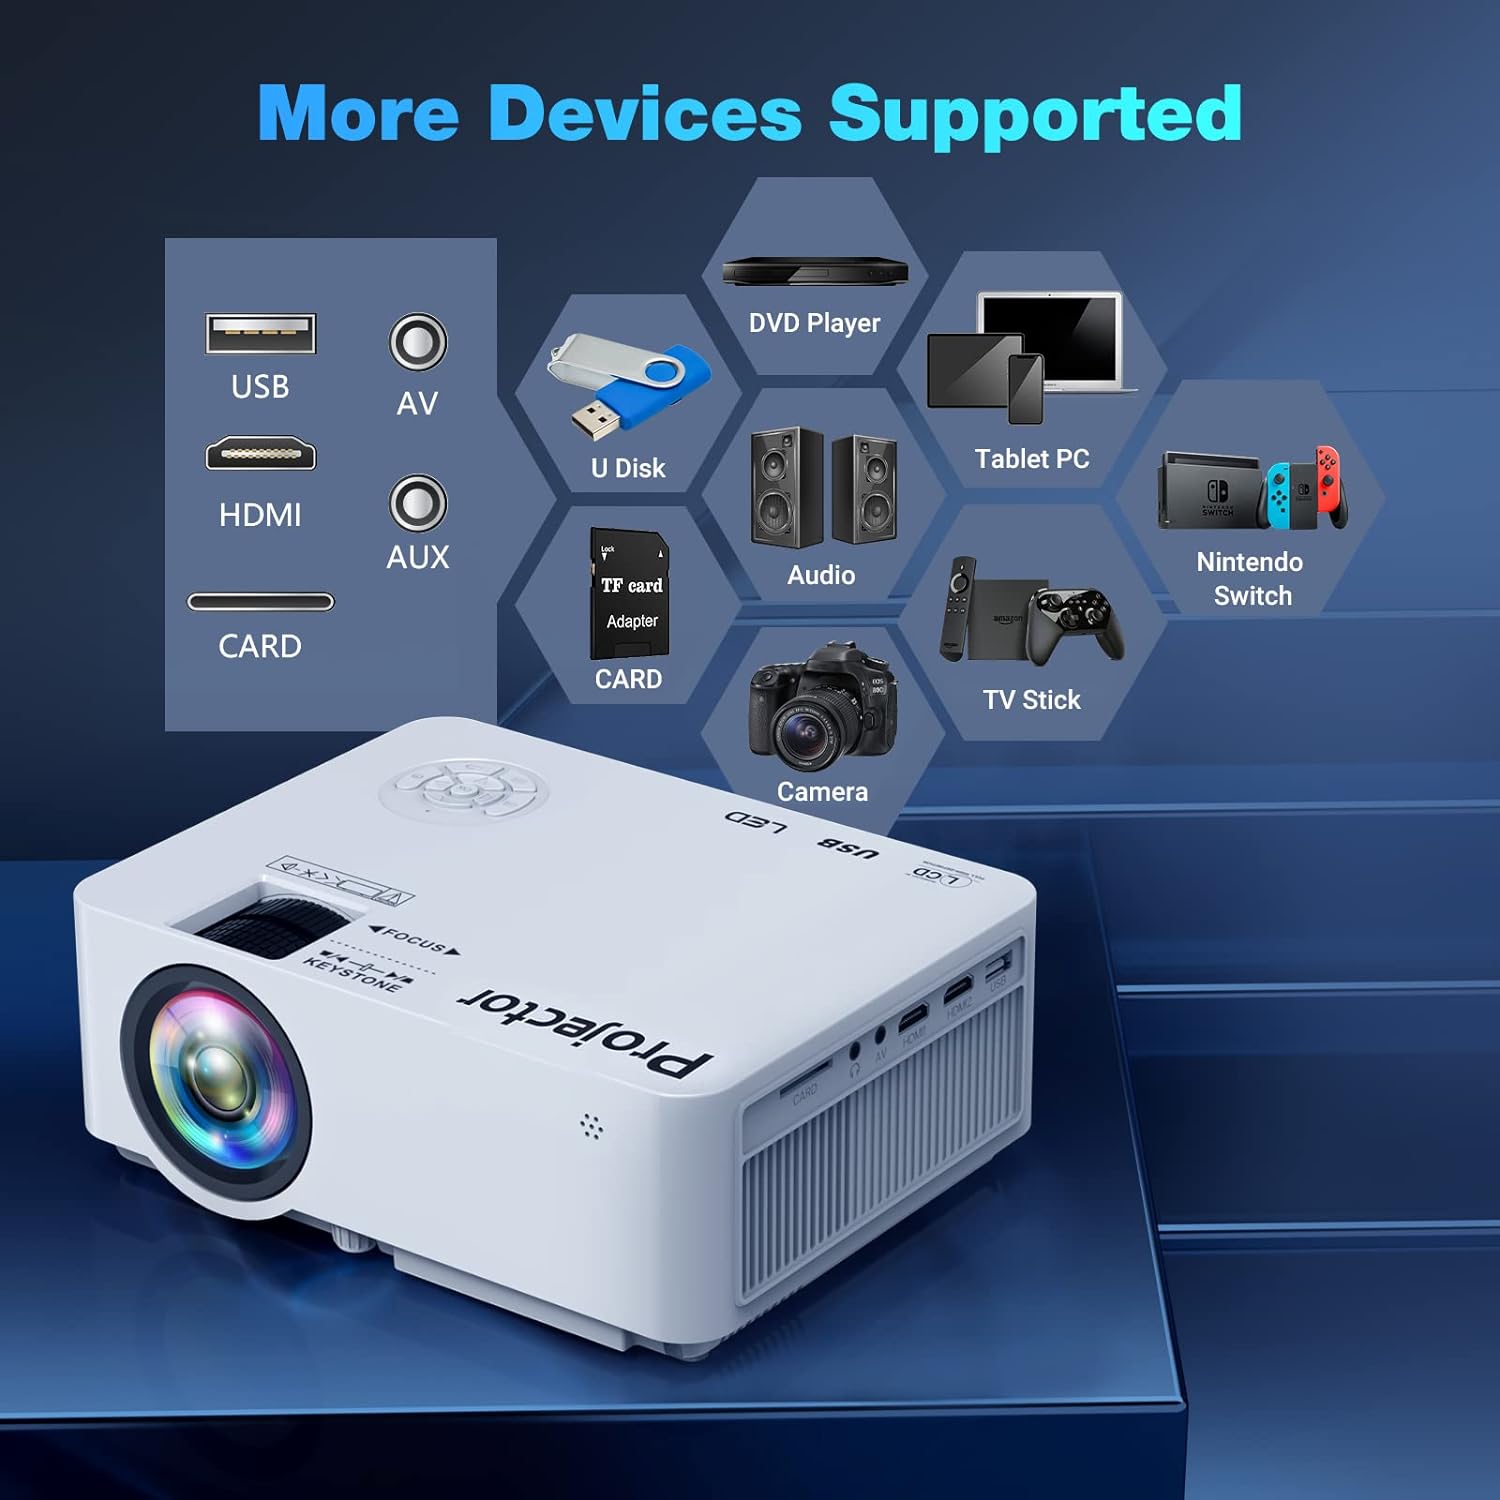 Proyector Bluetooth WiFi 5G, proyector de cine al aire libre